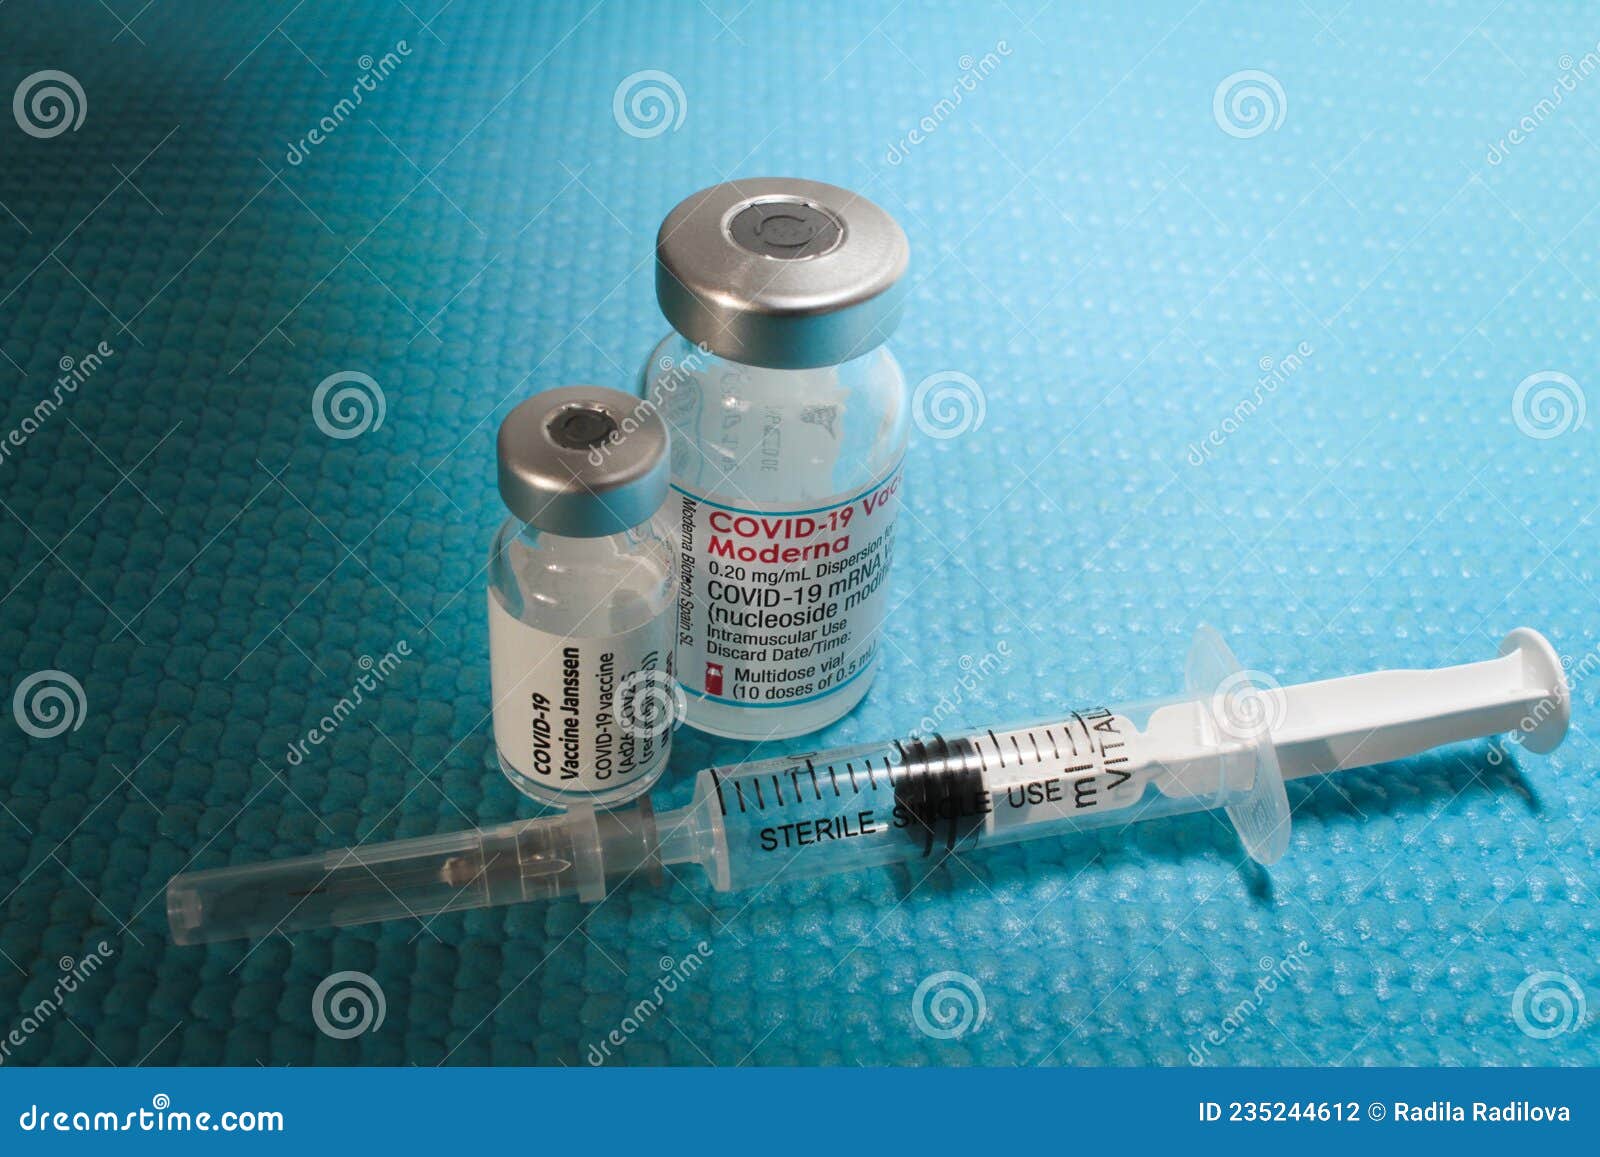 sofia, bulgaria Ã¢â¬â nov 22, 2021: vials with the moderna and janssen covid-19 vaccine are used at the corona vaccination centres